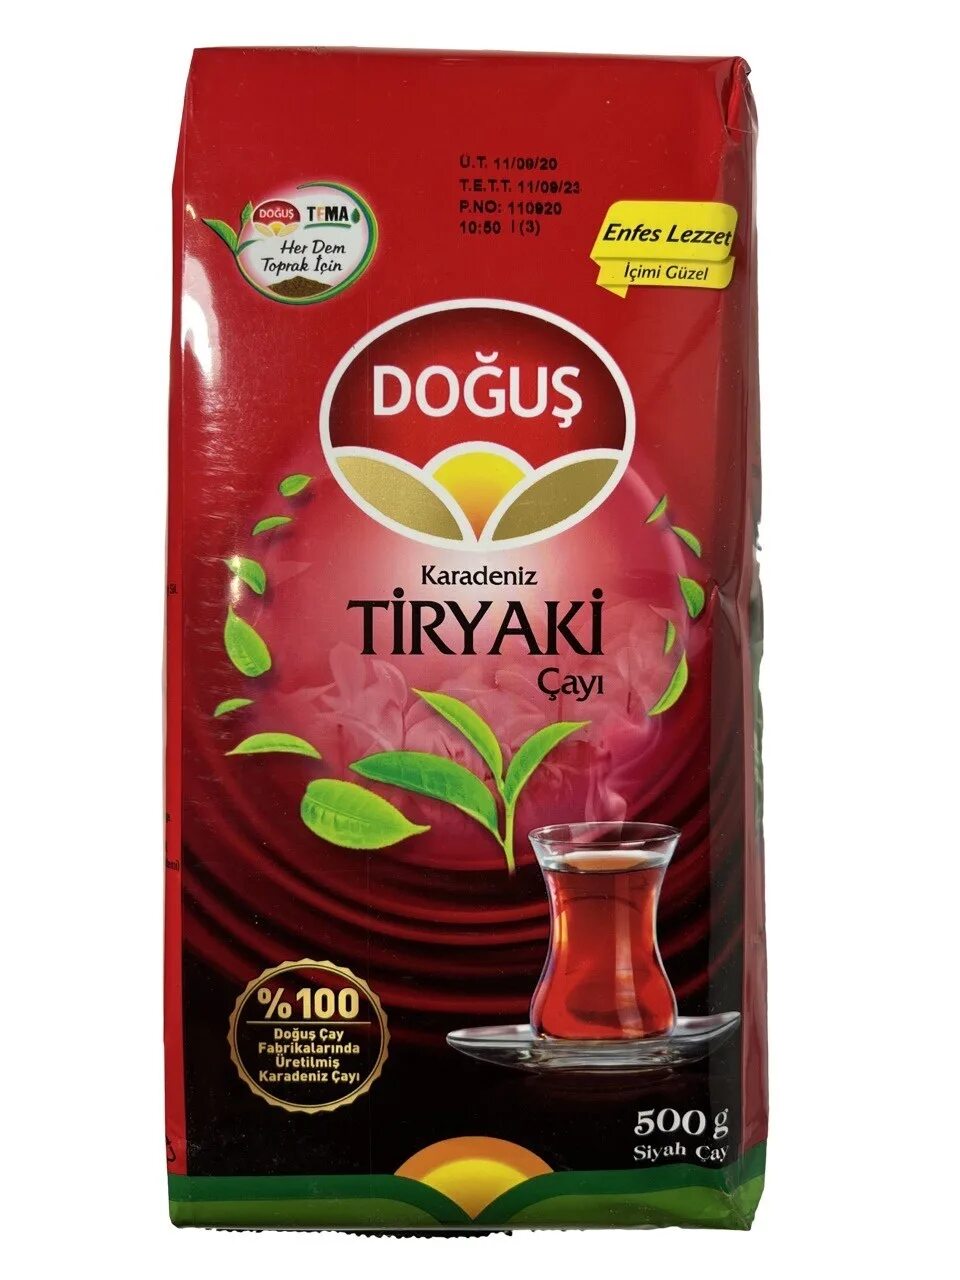 Кис чая. Турецкий чай Карадениз. Чай Tiryaki турецкий Dogus. Турецкий чай Karadem. Карадениз чай.